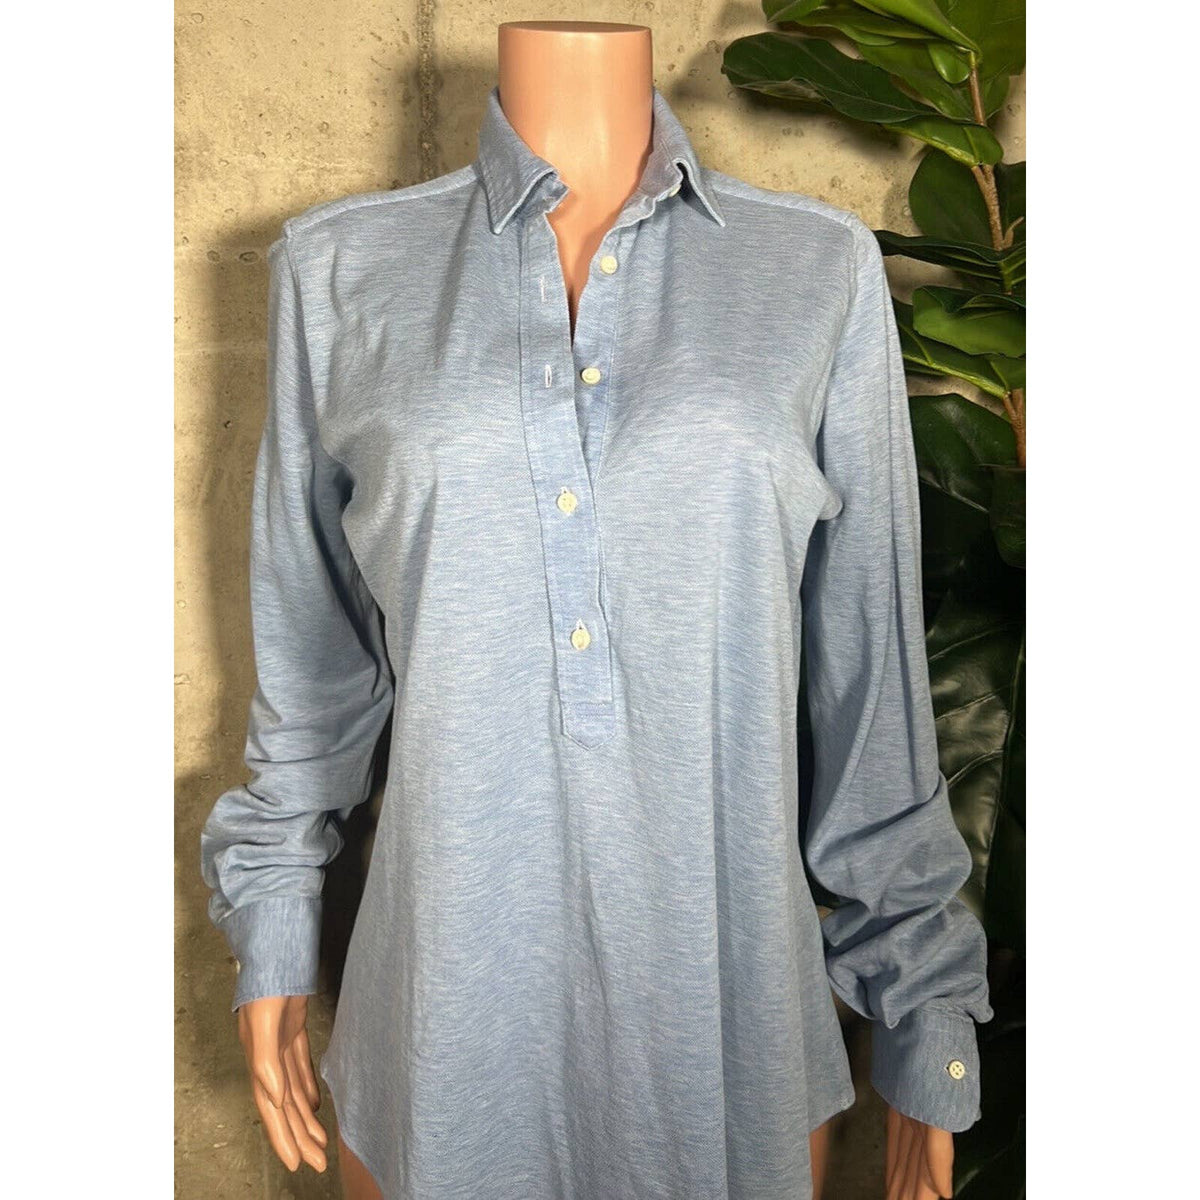 Ann Mashburn Blue 1/2 Button Up Shirt Sz. Medium